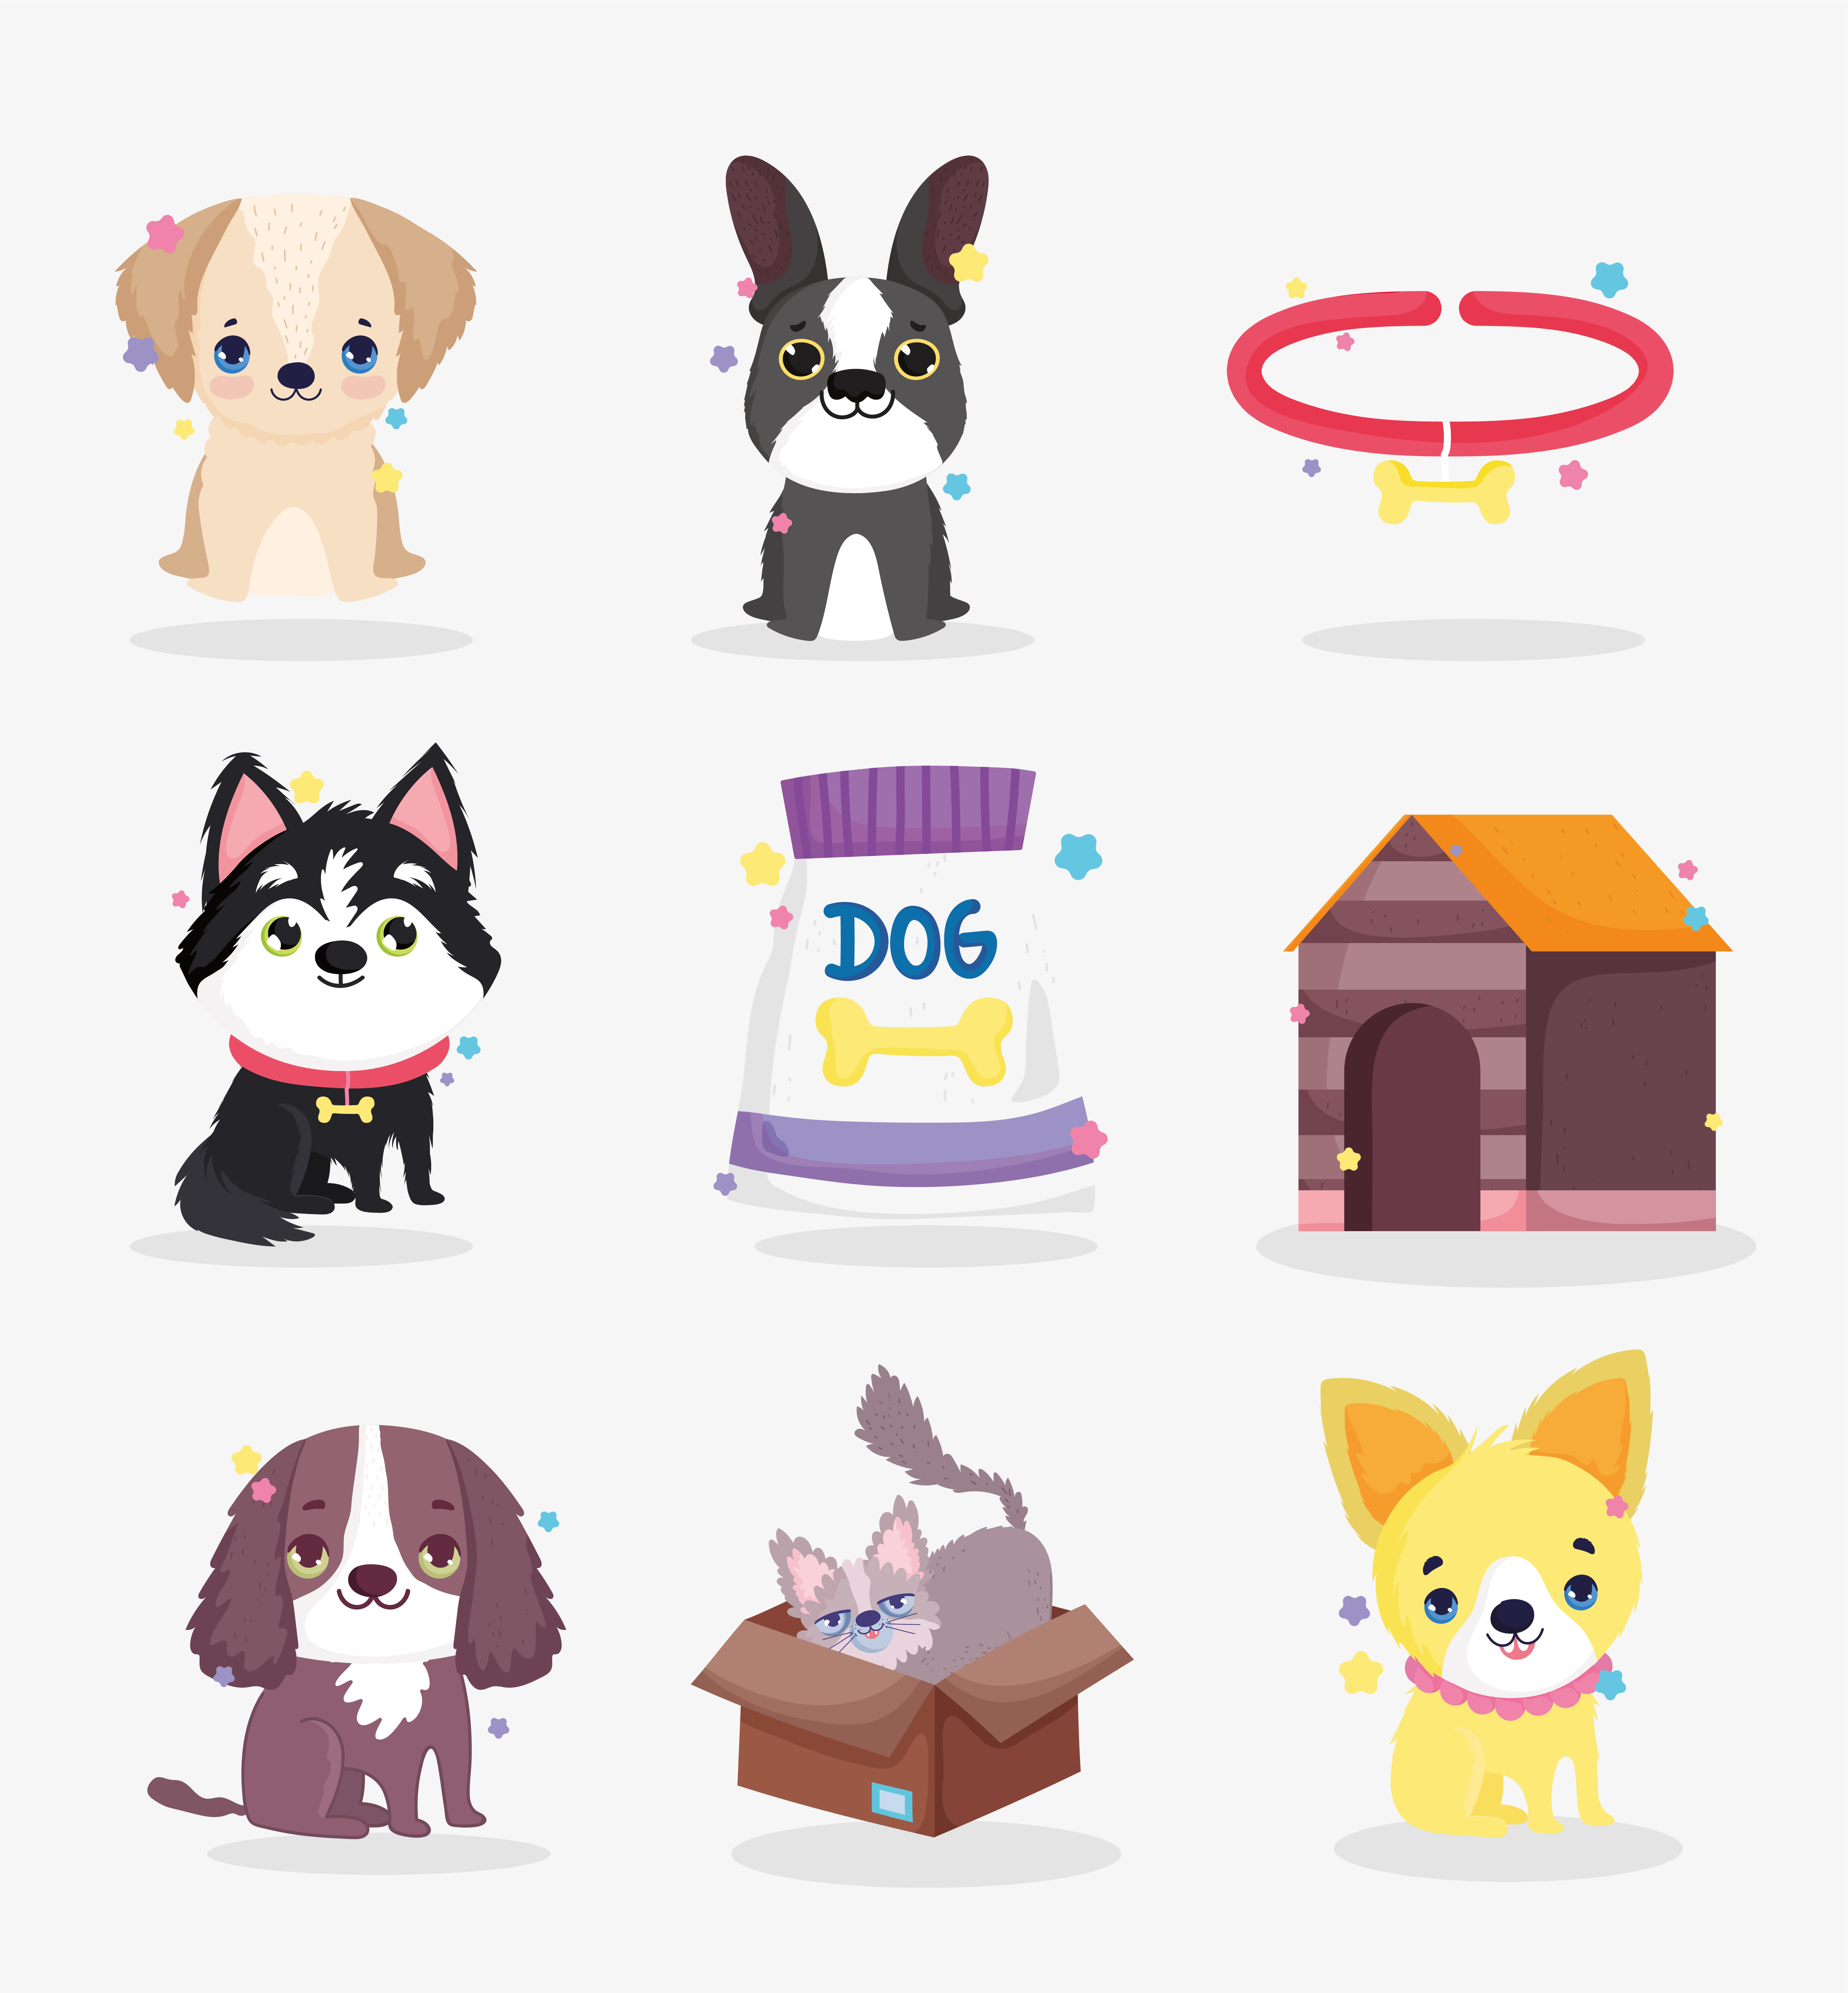 Pet characters